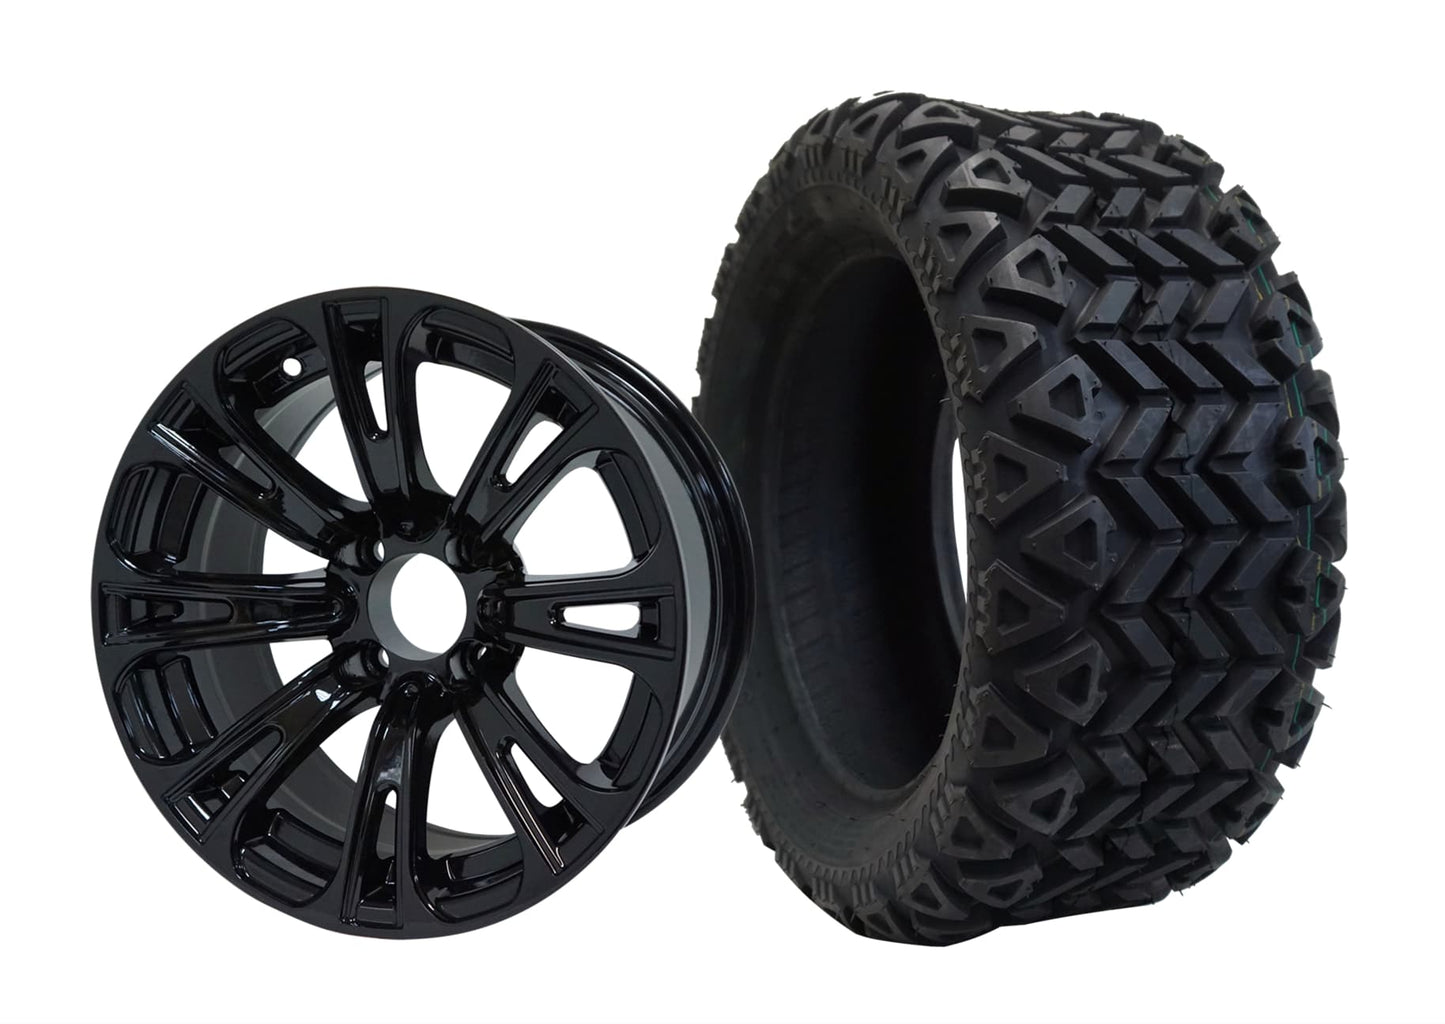 BNDL-TR1403-WH1421-LN0002-CC0002 – SGC 14″ Voodoo Glossy Black Wheel – Aluminum Alloy / STEELENG 23″x10″-14″ All Terrain Tire DOT Approved - Set of 4